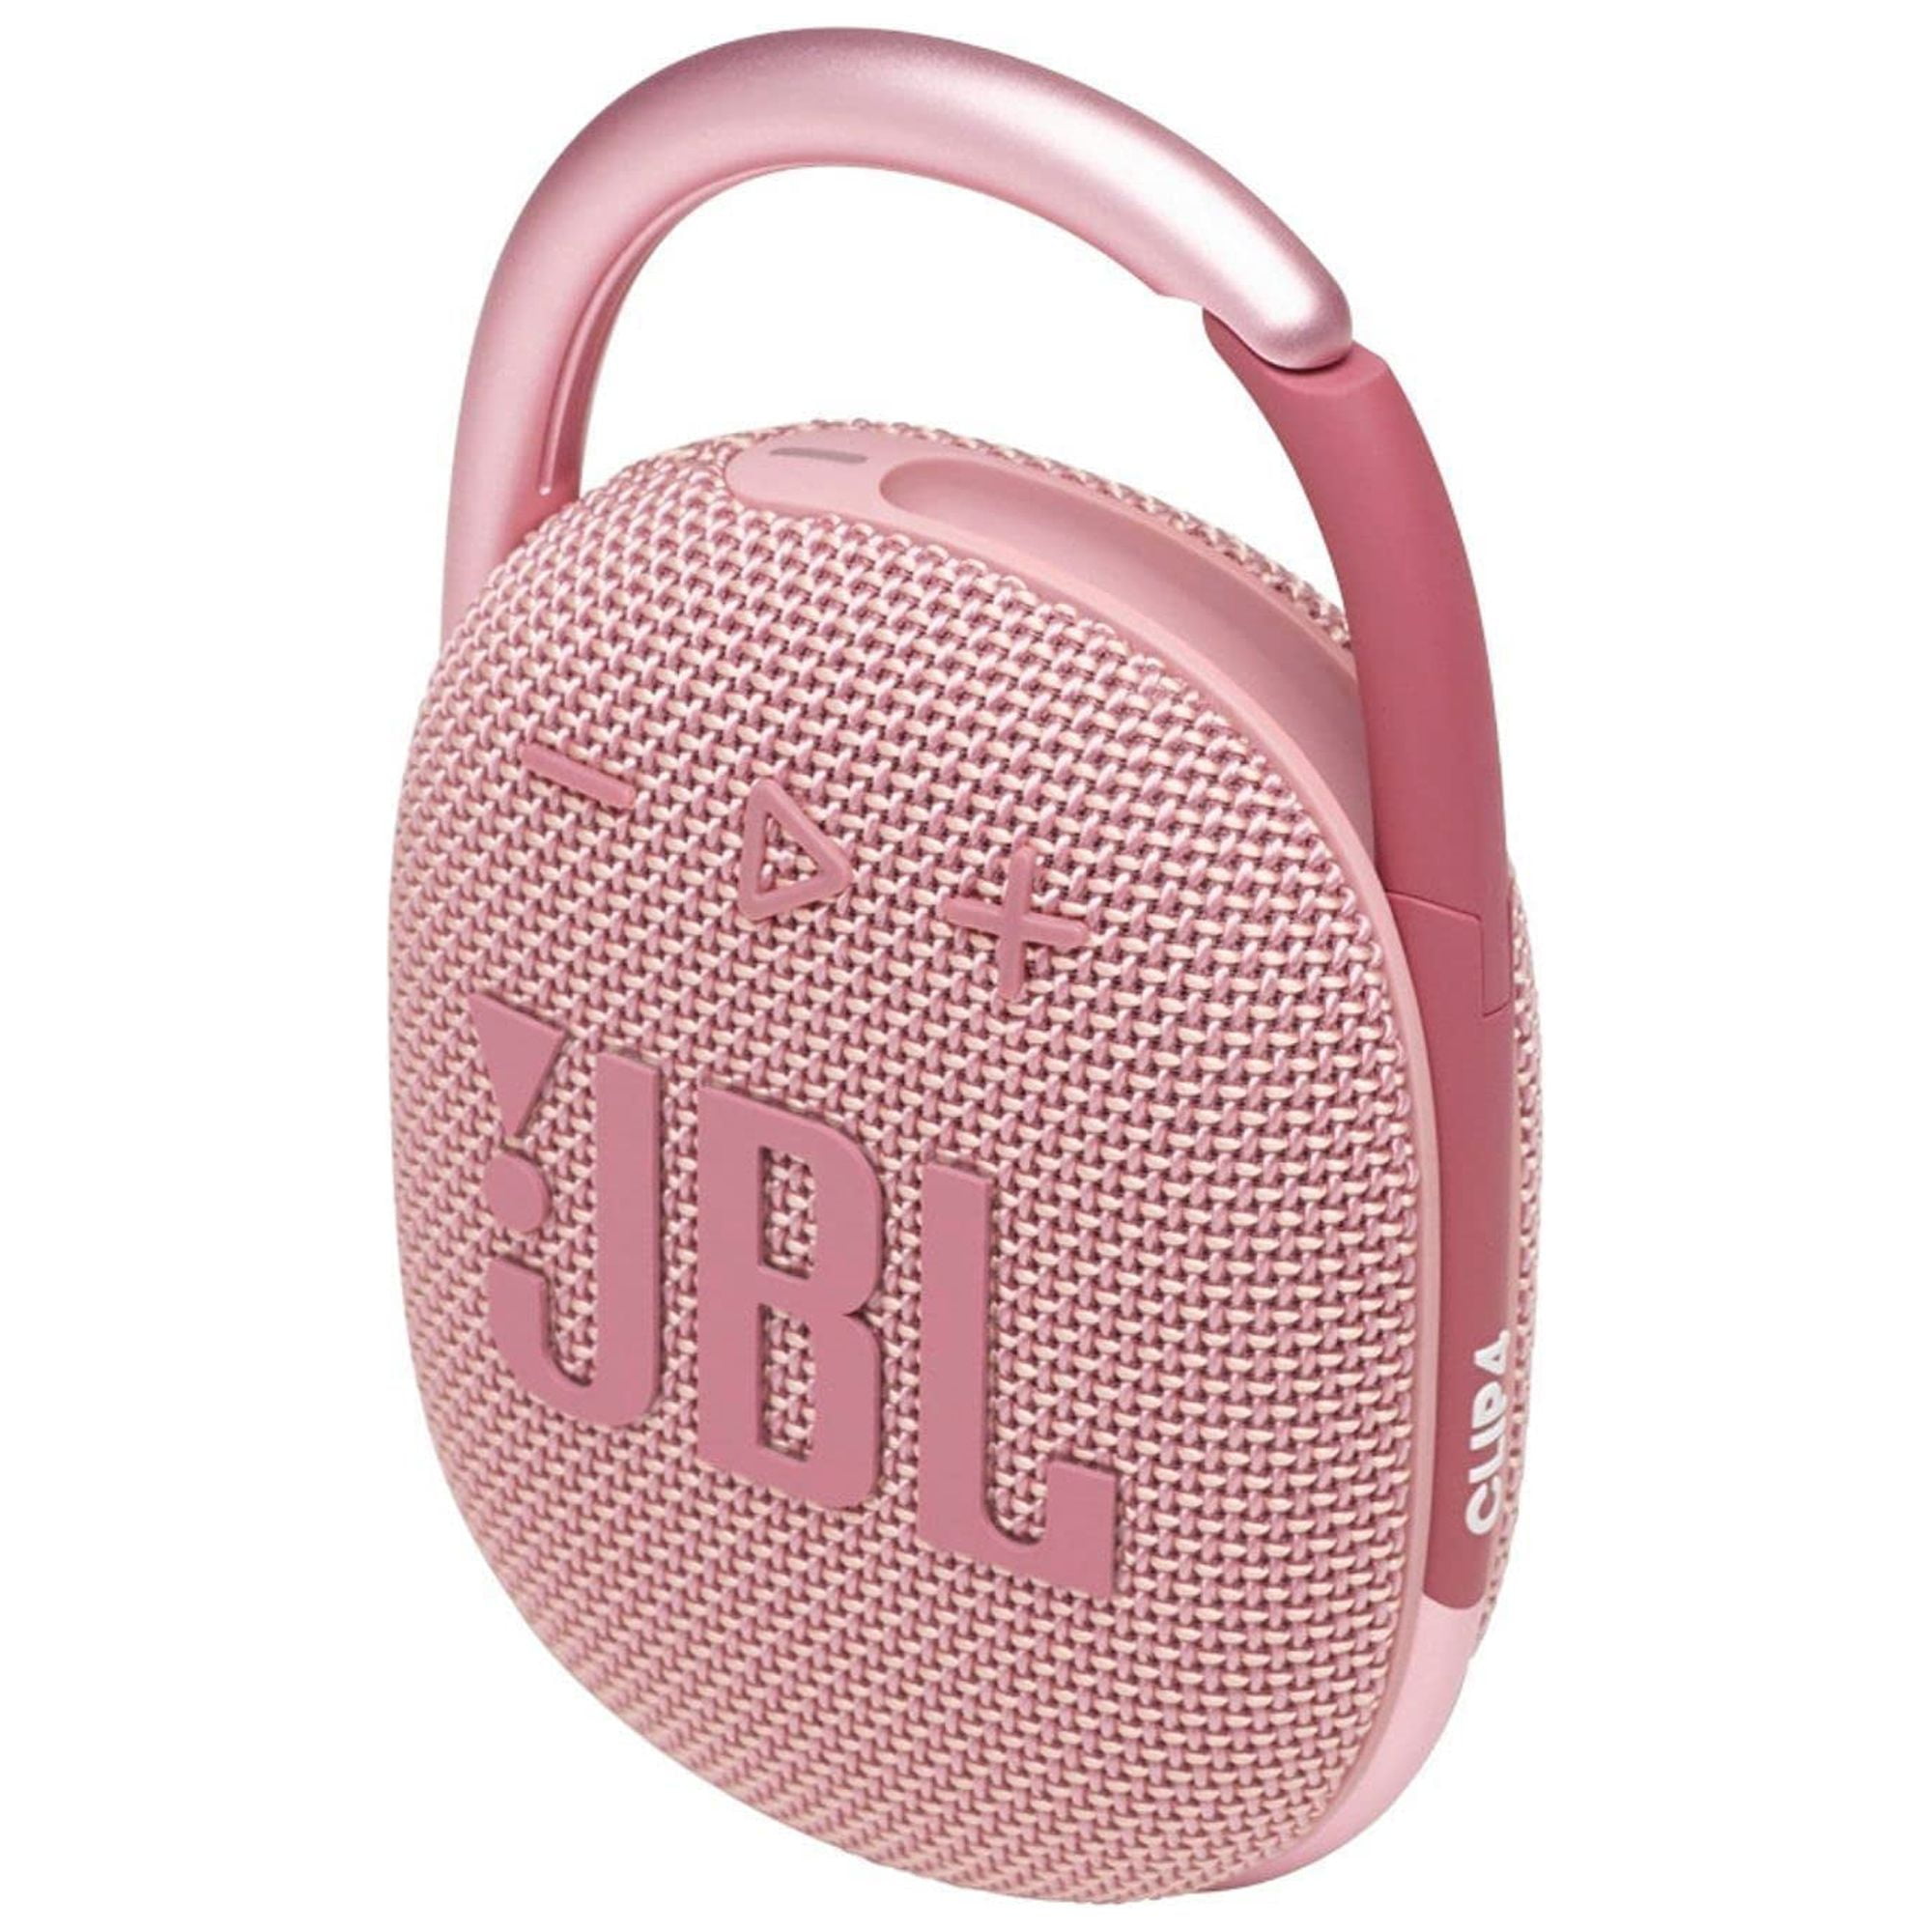 JBL Clip 4 - Portable Mini Bluetooth Speaker, big audio and punchy bass,  integrated carabiner, IP67 waterproof dustproof, 10 hours of playtime